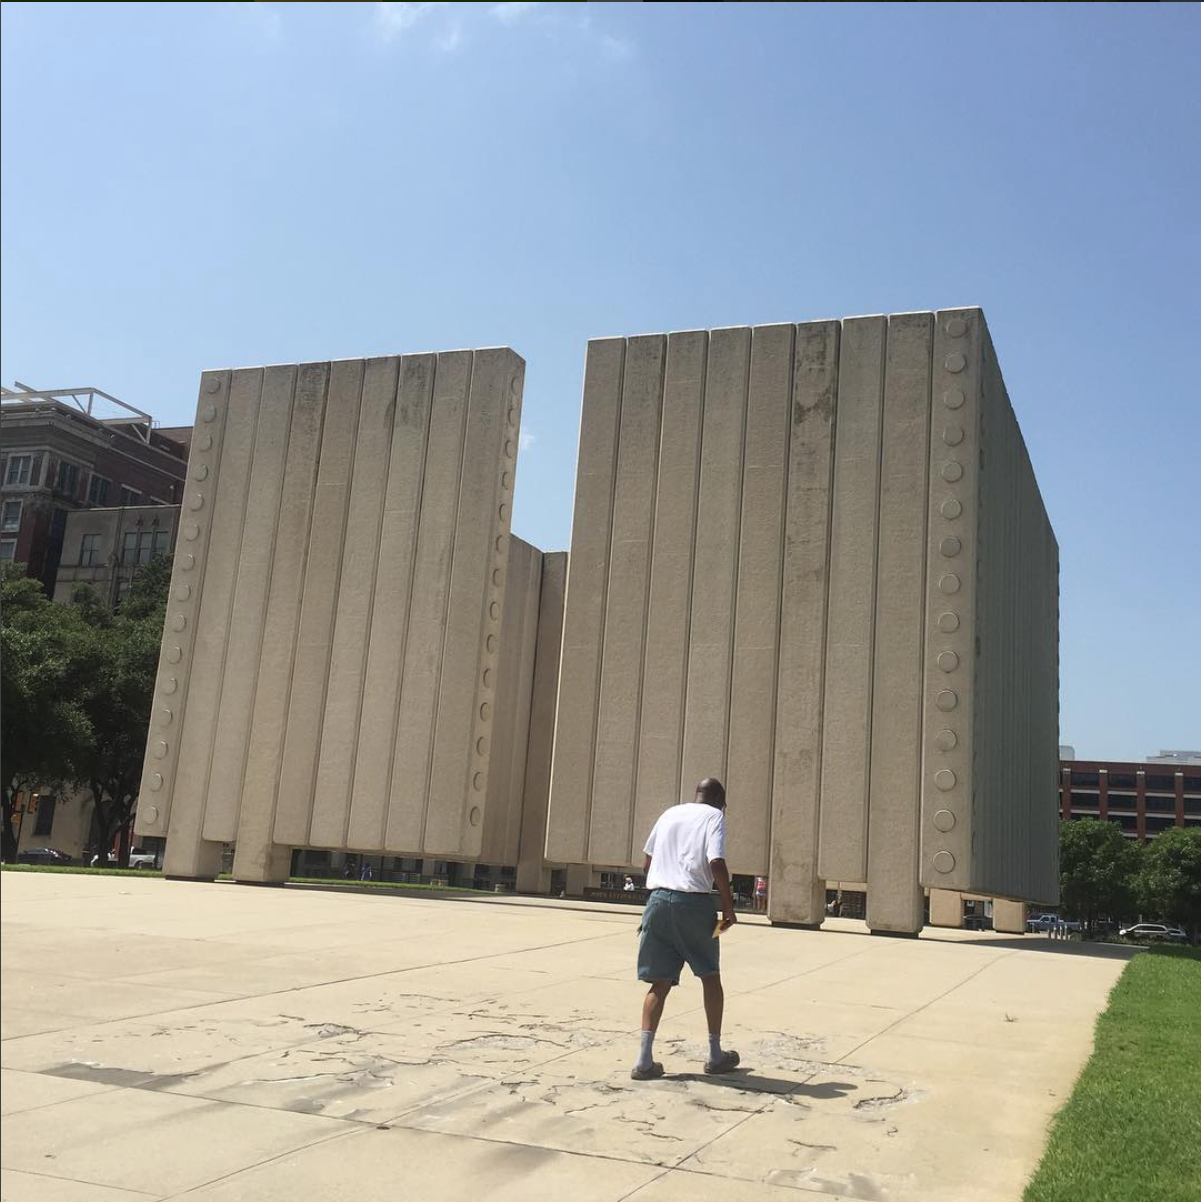   Dallas, TX. JFK Memorial.&nbsp;A day that changed everything..&nbsp; #SnapshotLives   